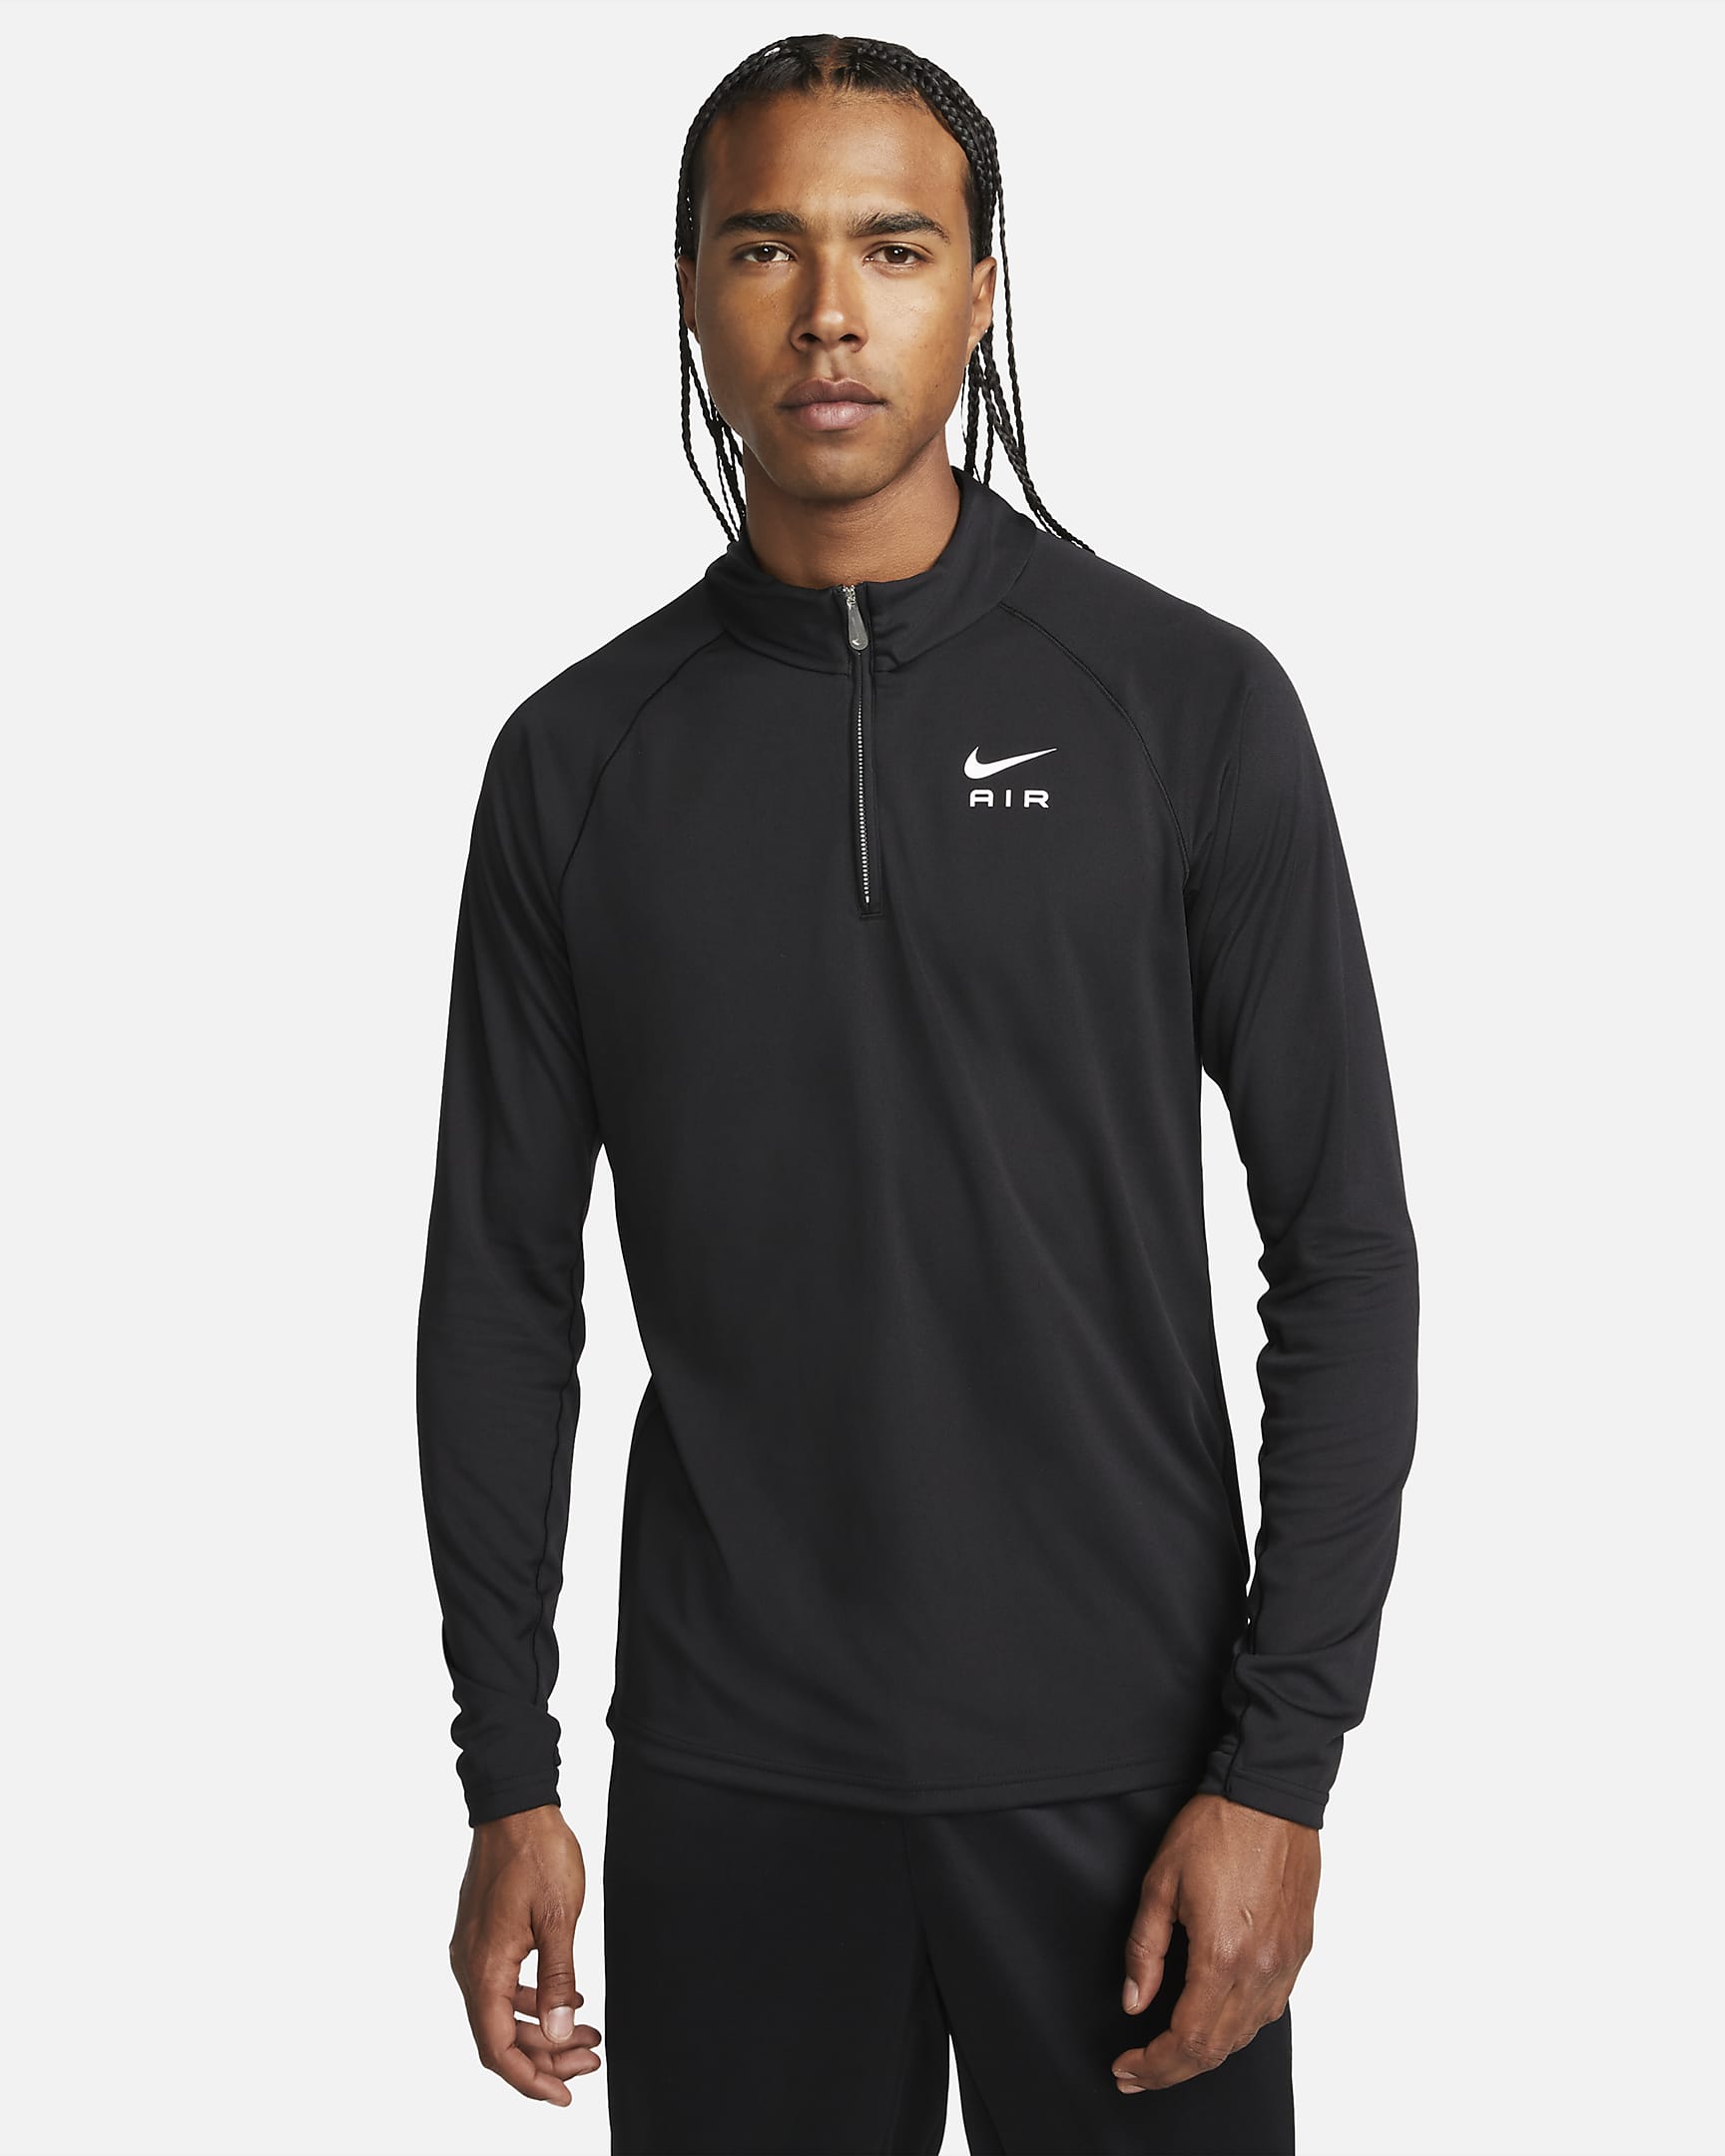 Nike Sportswear Air Men's 1/4-Zip Polyknit Top. Nike NL